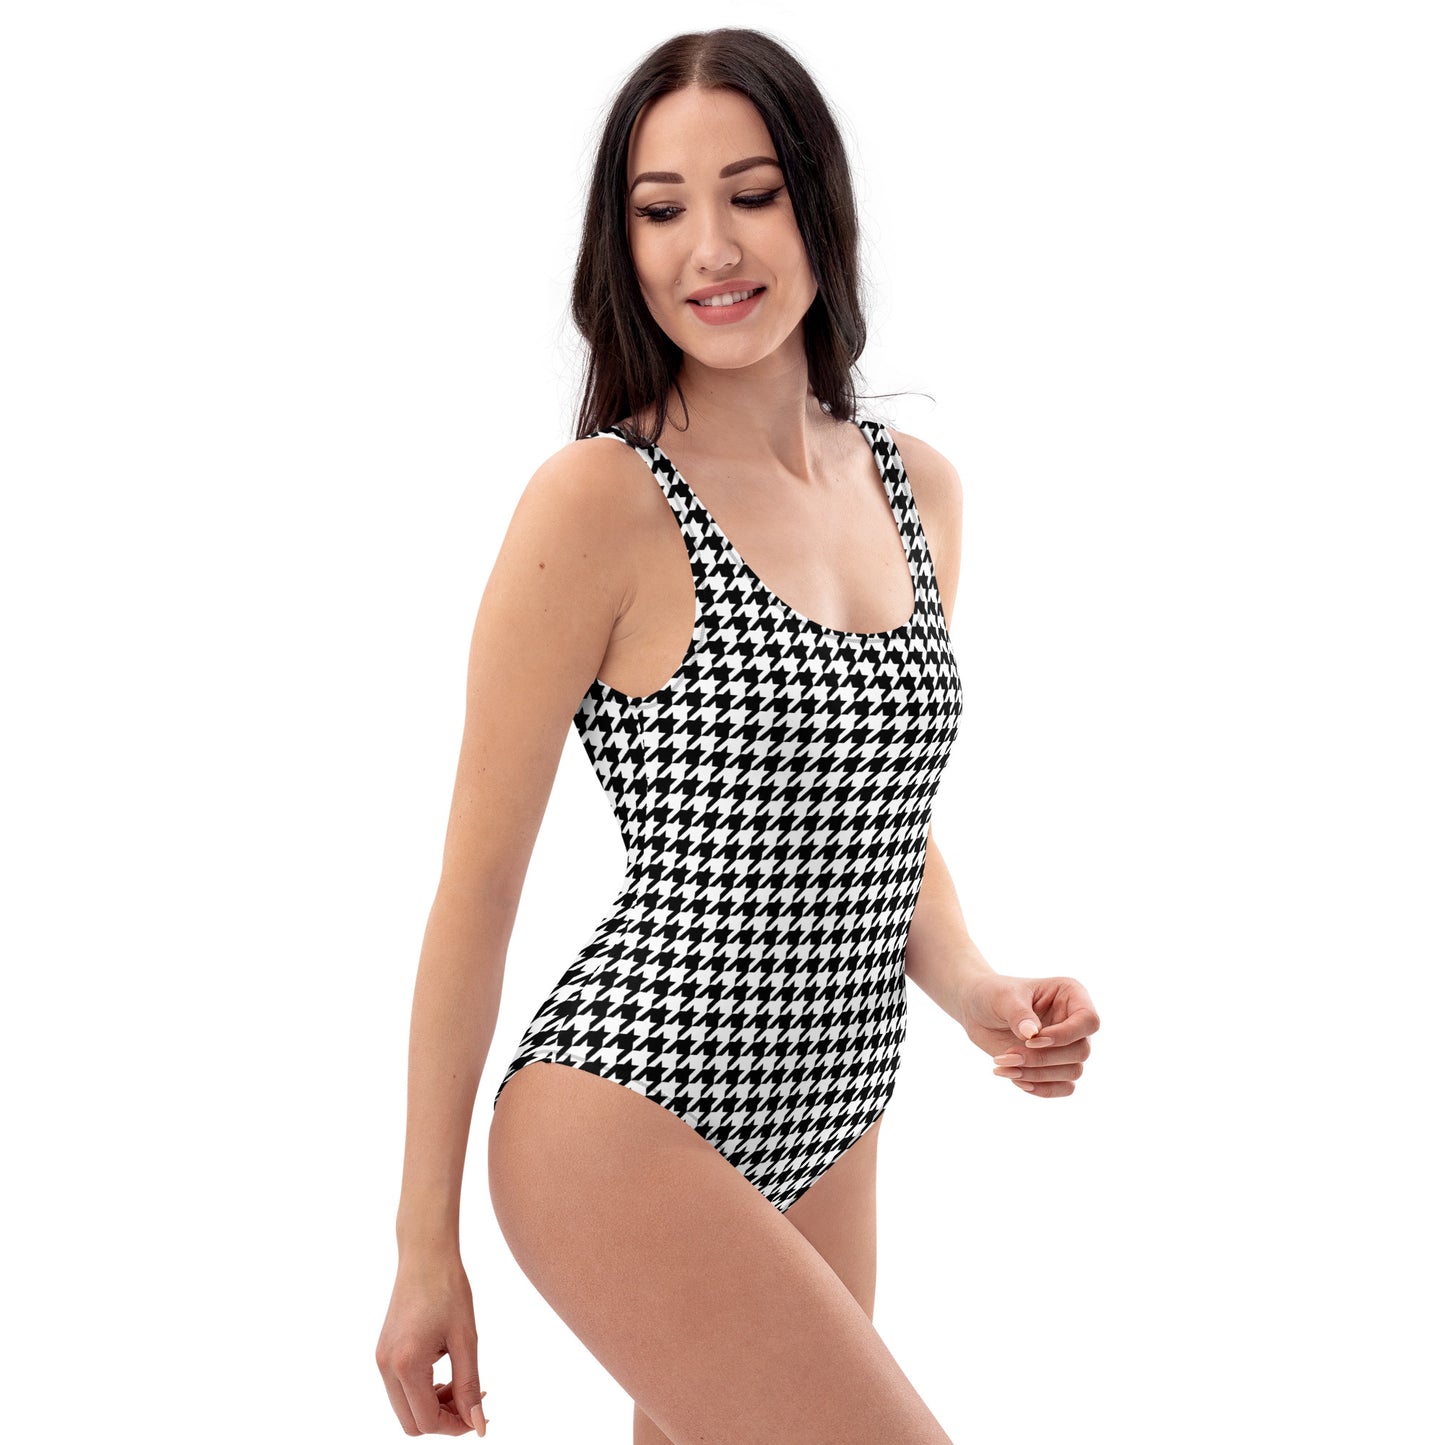 Houndstooth One Piece Swimsuit for Women, Black White Cute Designer Swim Swimming Bathing Suits Body Ladies Swimwear